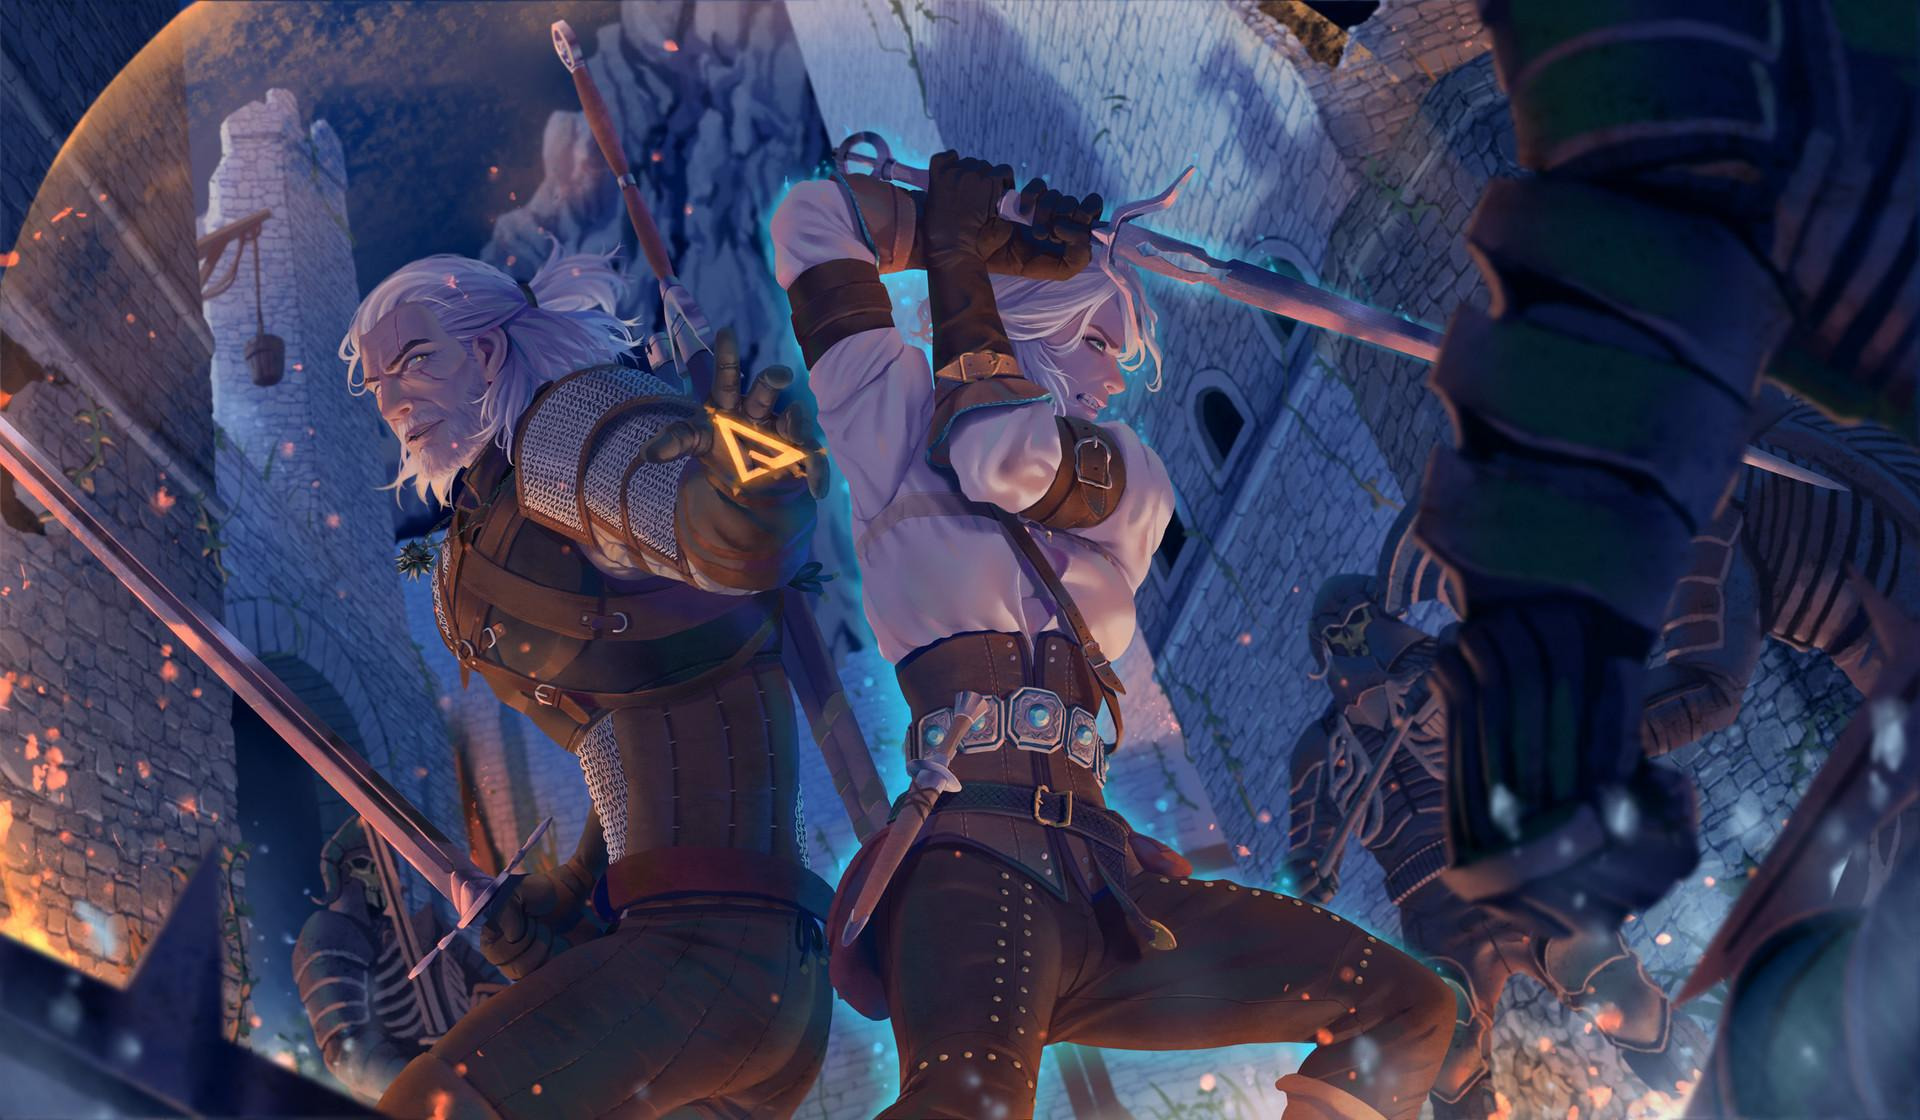 Geralt of Rivia, Cirilla Fiona Elen Riannon, The Witcher 3: Wild Hunt, Artwork, The Witcher Wallpaper